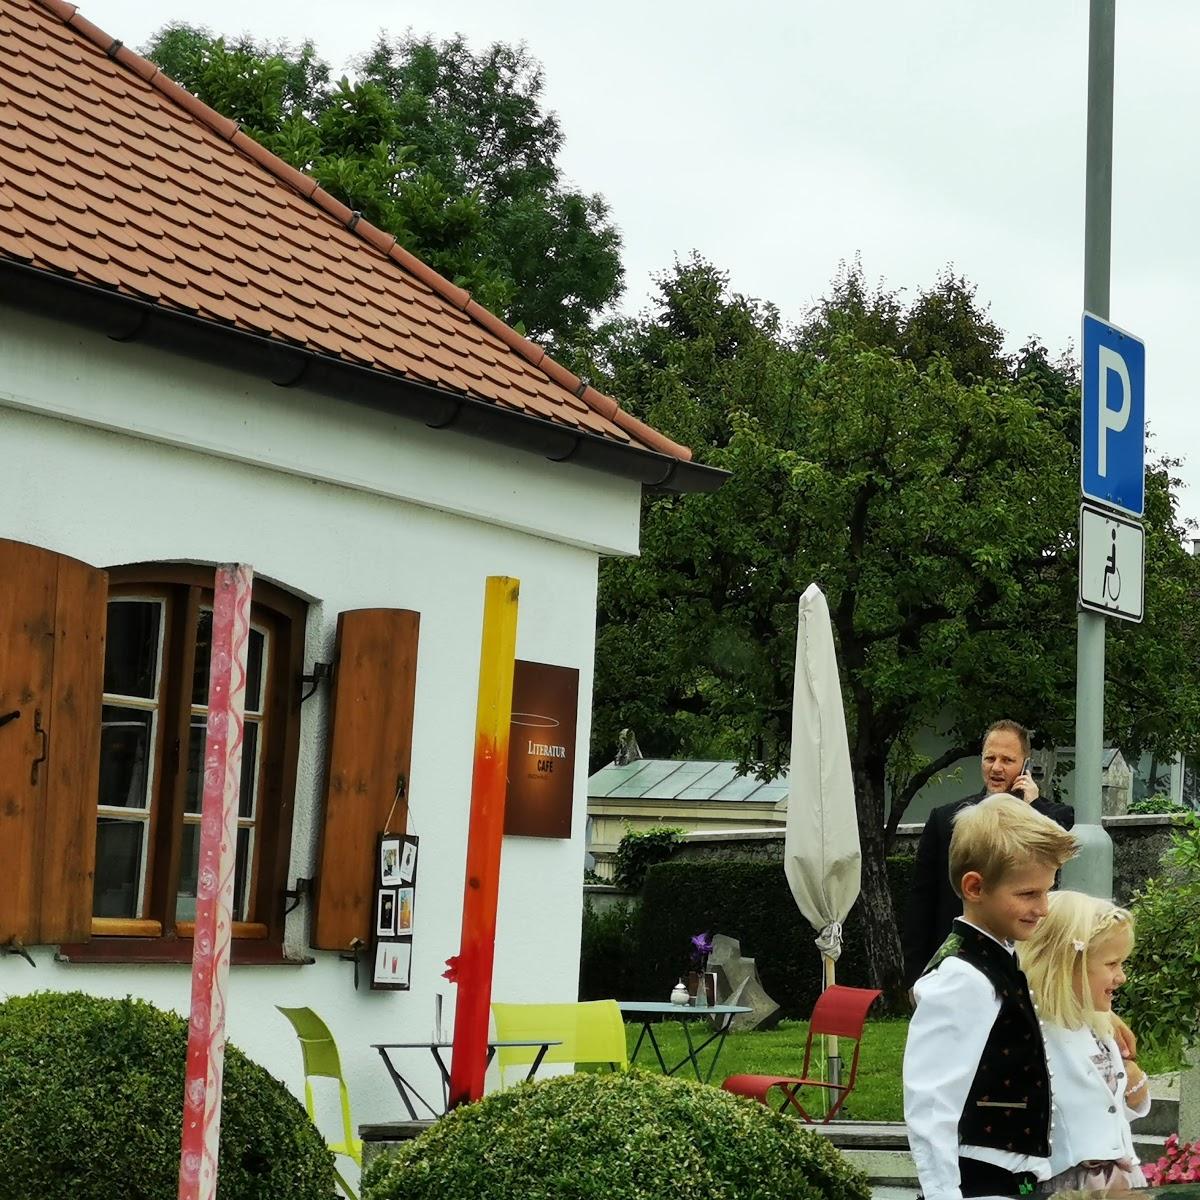 Restaurant "Literaturcafé Waschhäusl e.V." in Pöcking